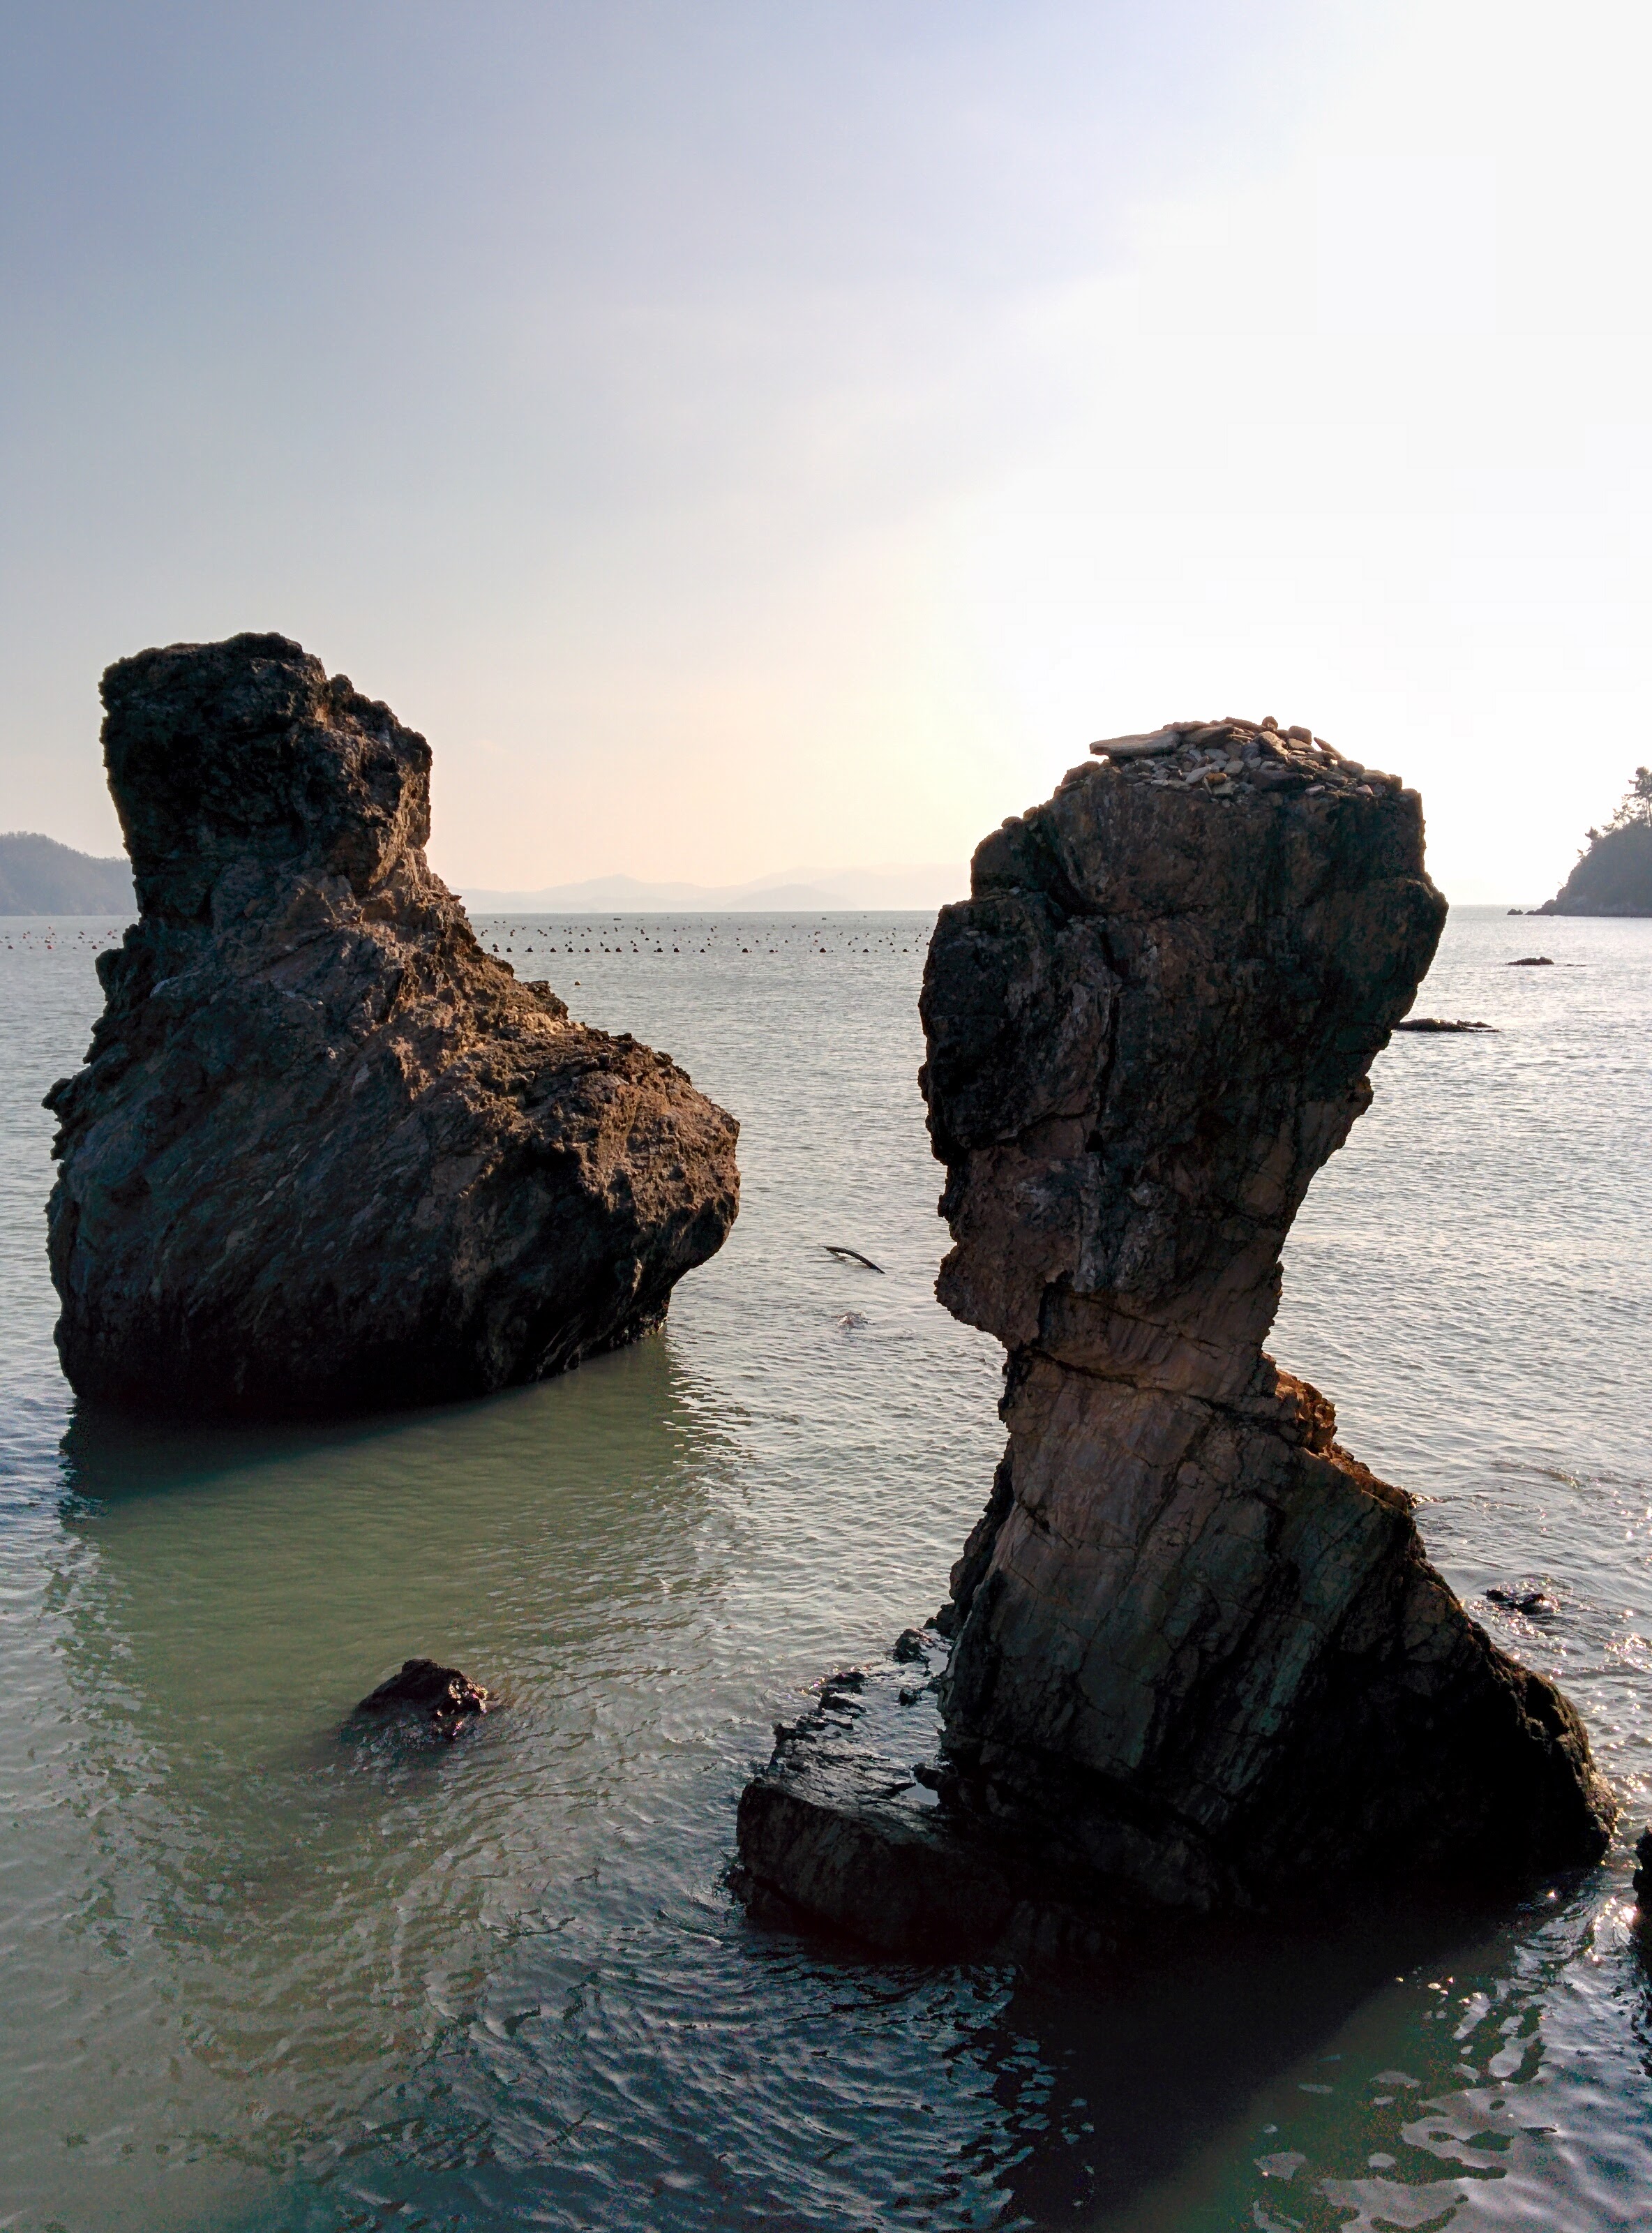 IMG_20151229_145859.jpg 해남 땅끝마을관광지 앞 바다 풍경 파노라마 사진